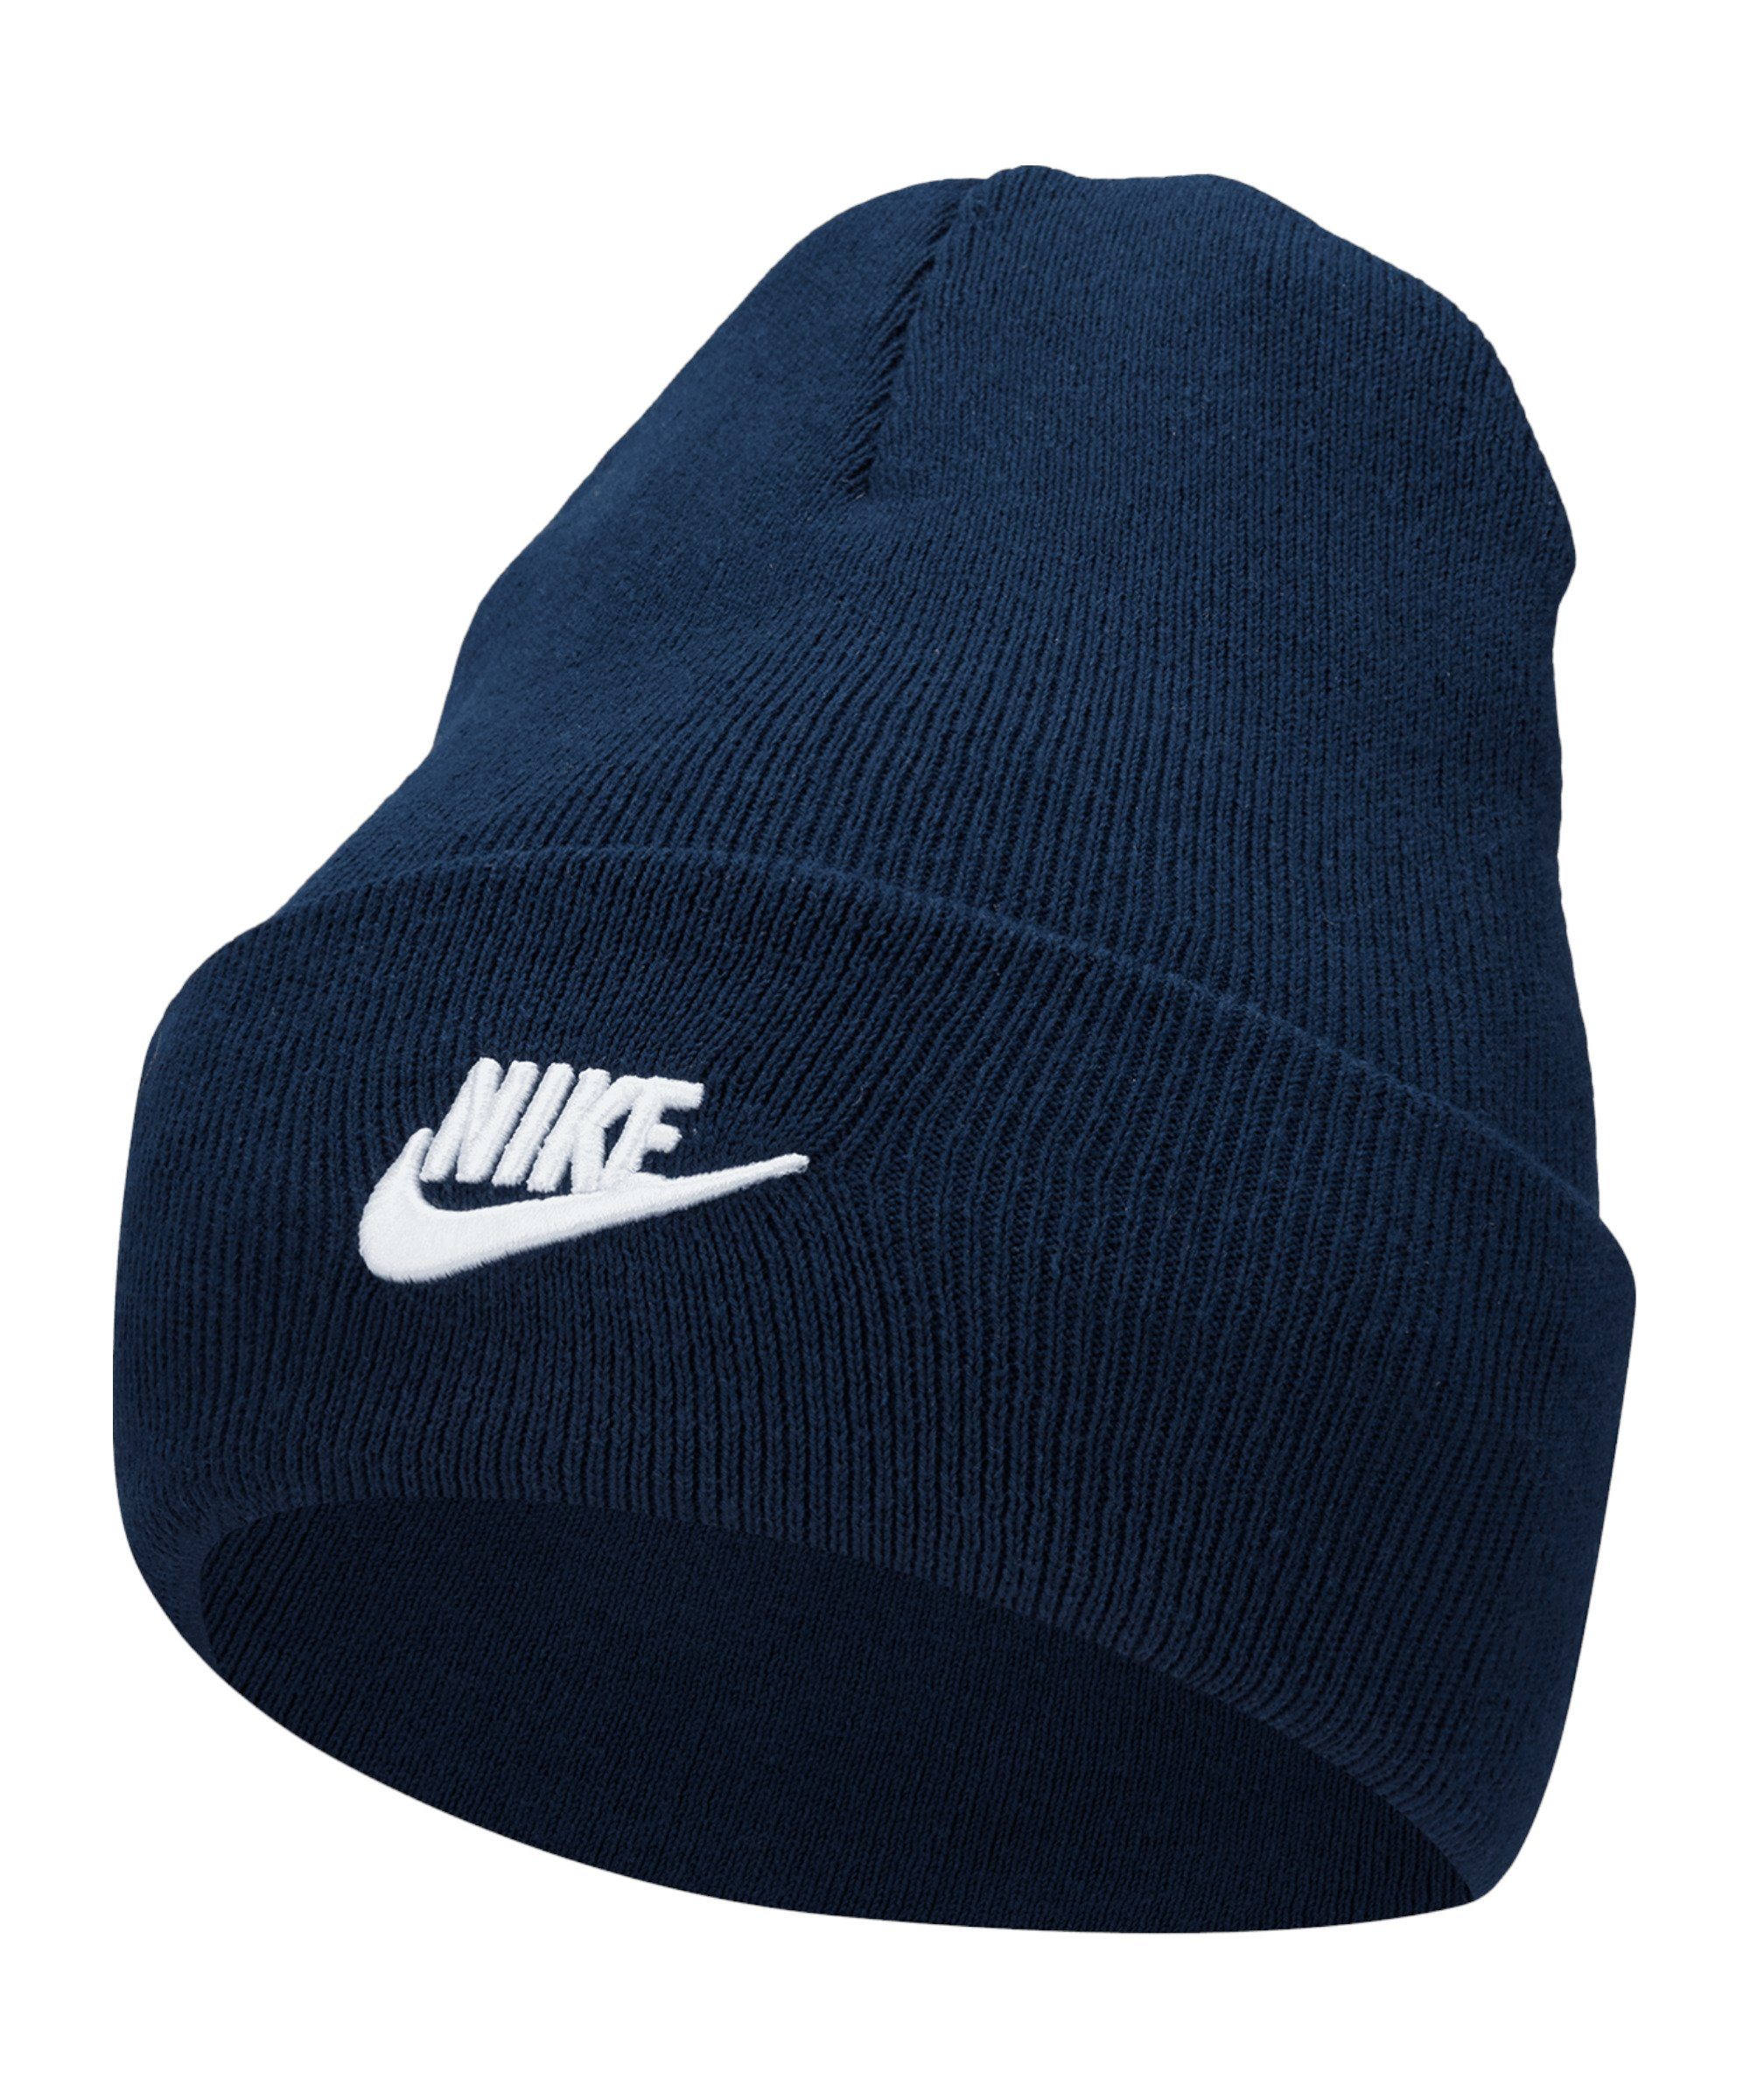 Baseball Sportswear Cap blauweiss Futura Nike Utilitiy Mütze